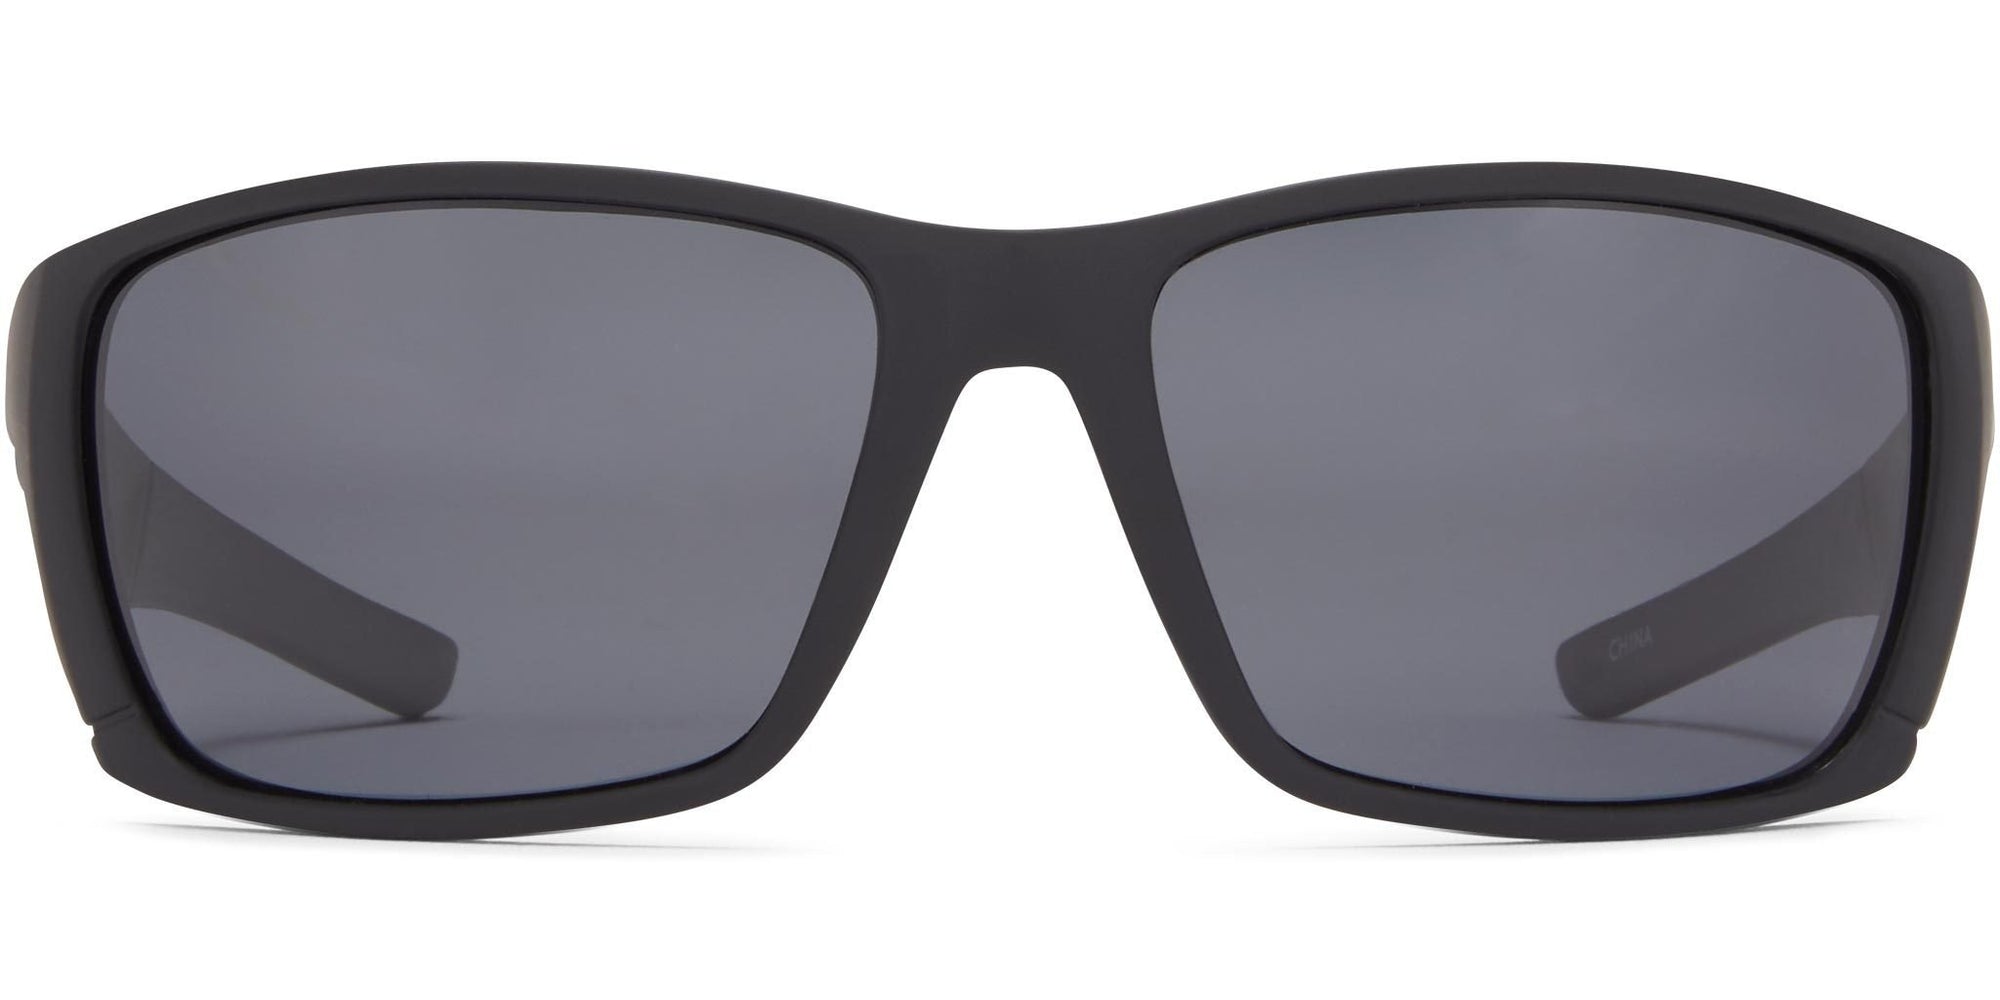 Hook - Matte Black/Gray Lens - Polarized Sunglasses